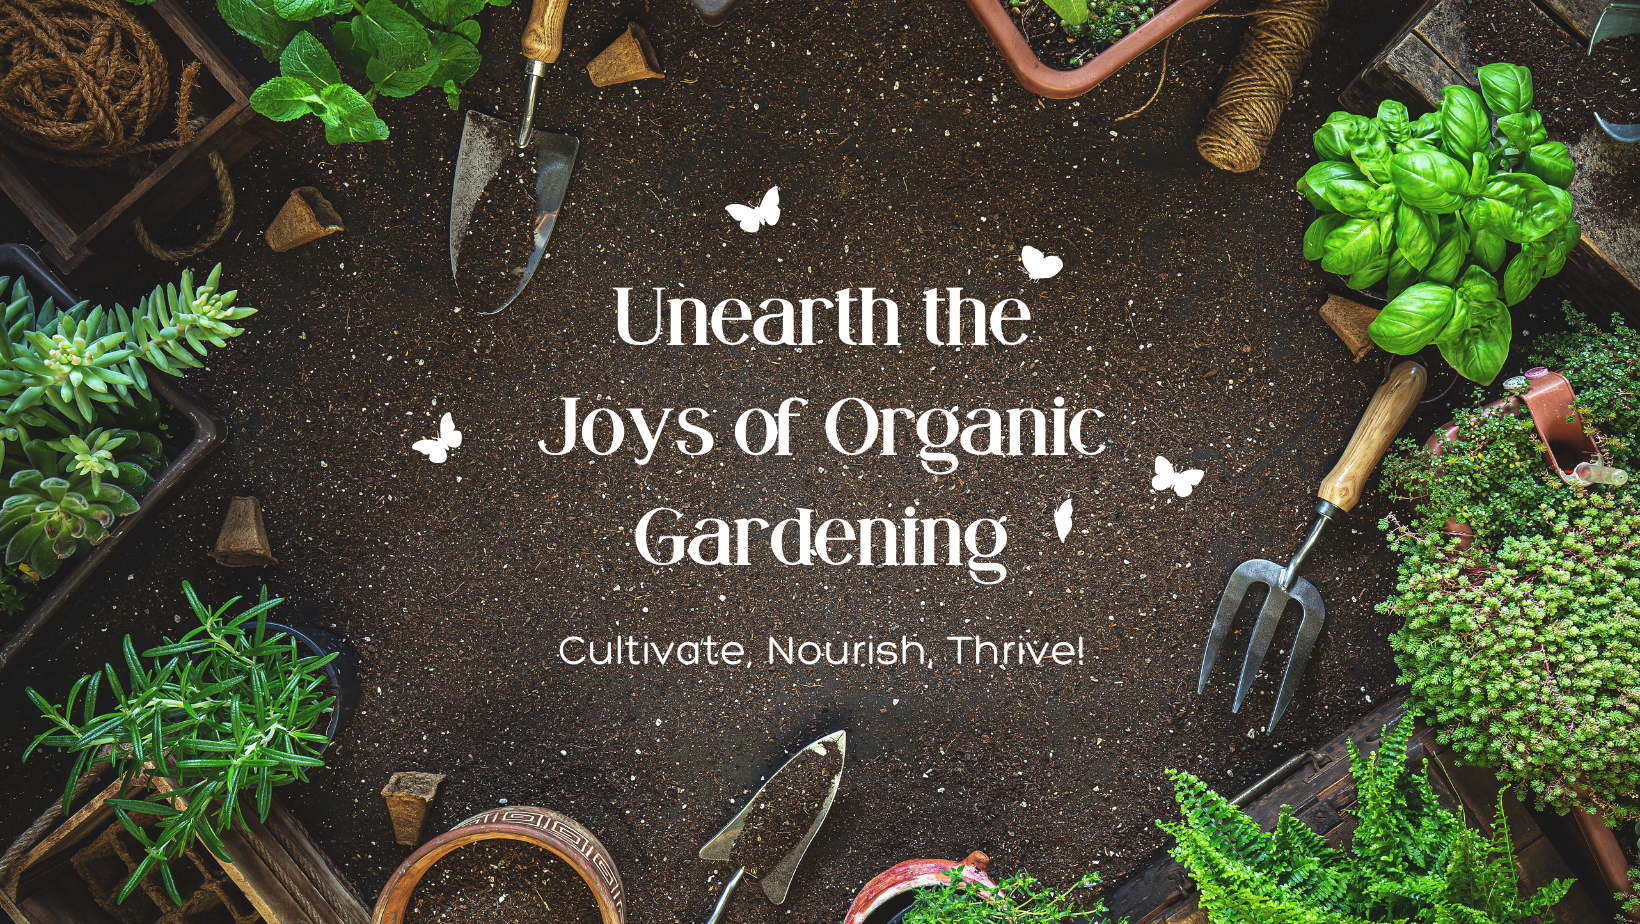 organic gardening tools, planters and plants